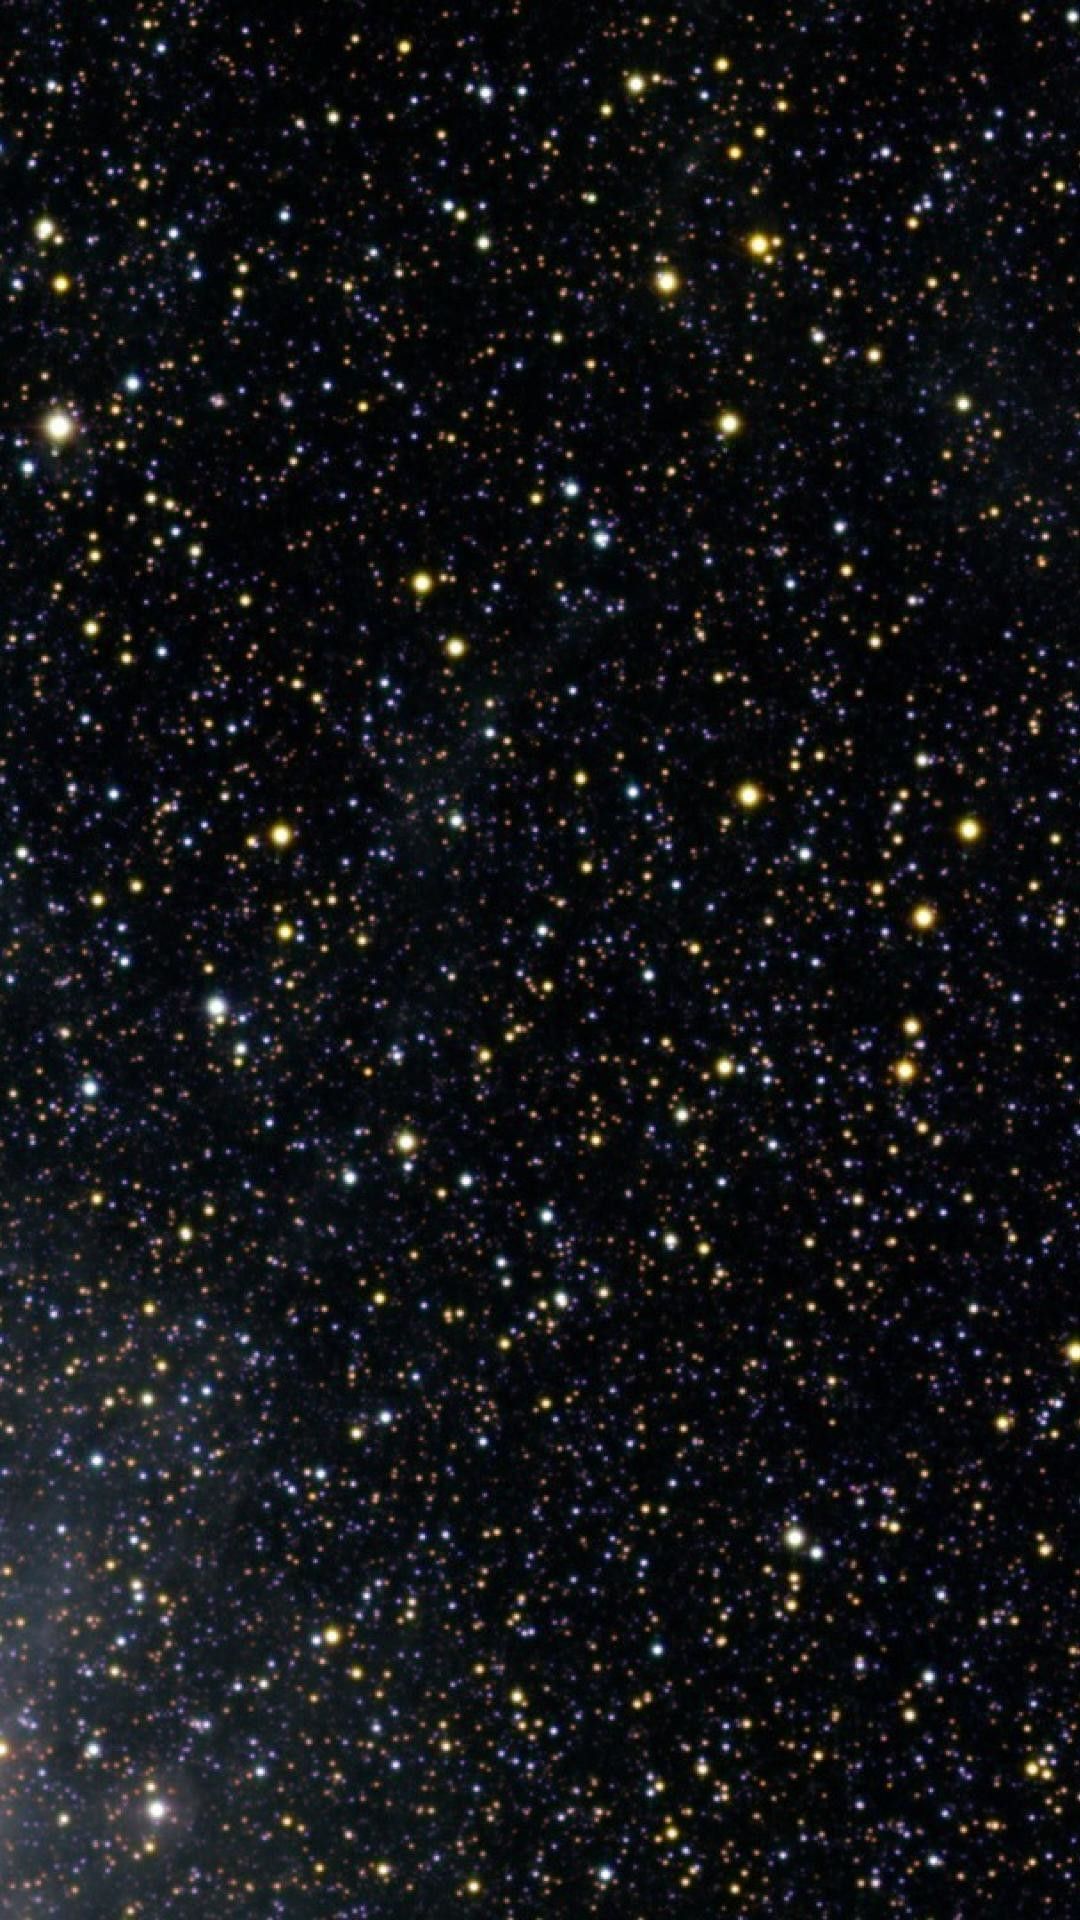 black star space background